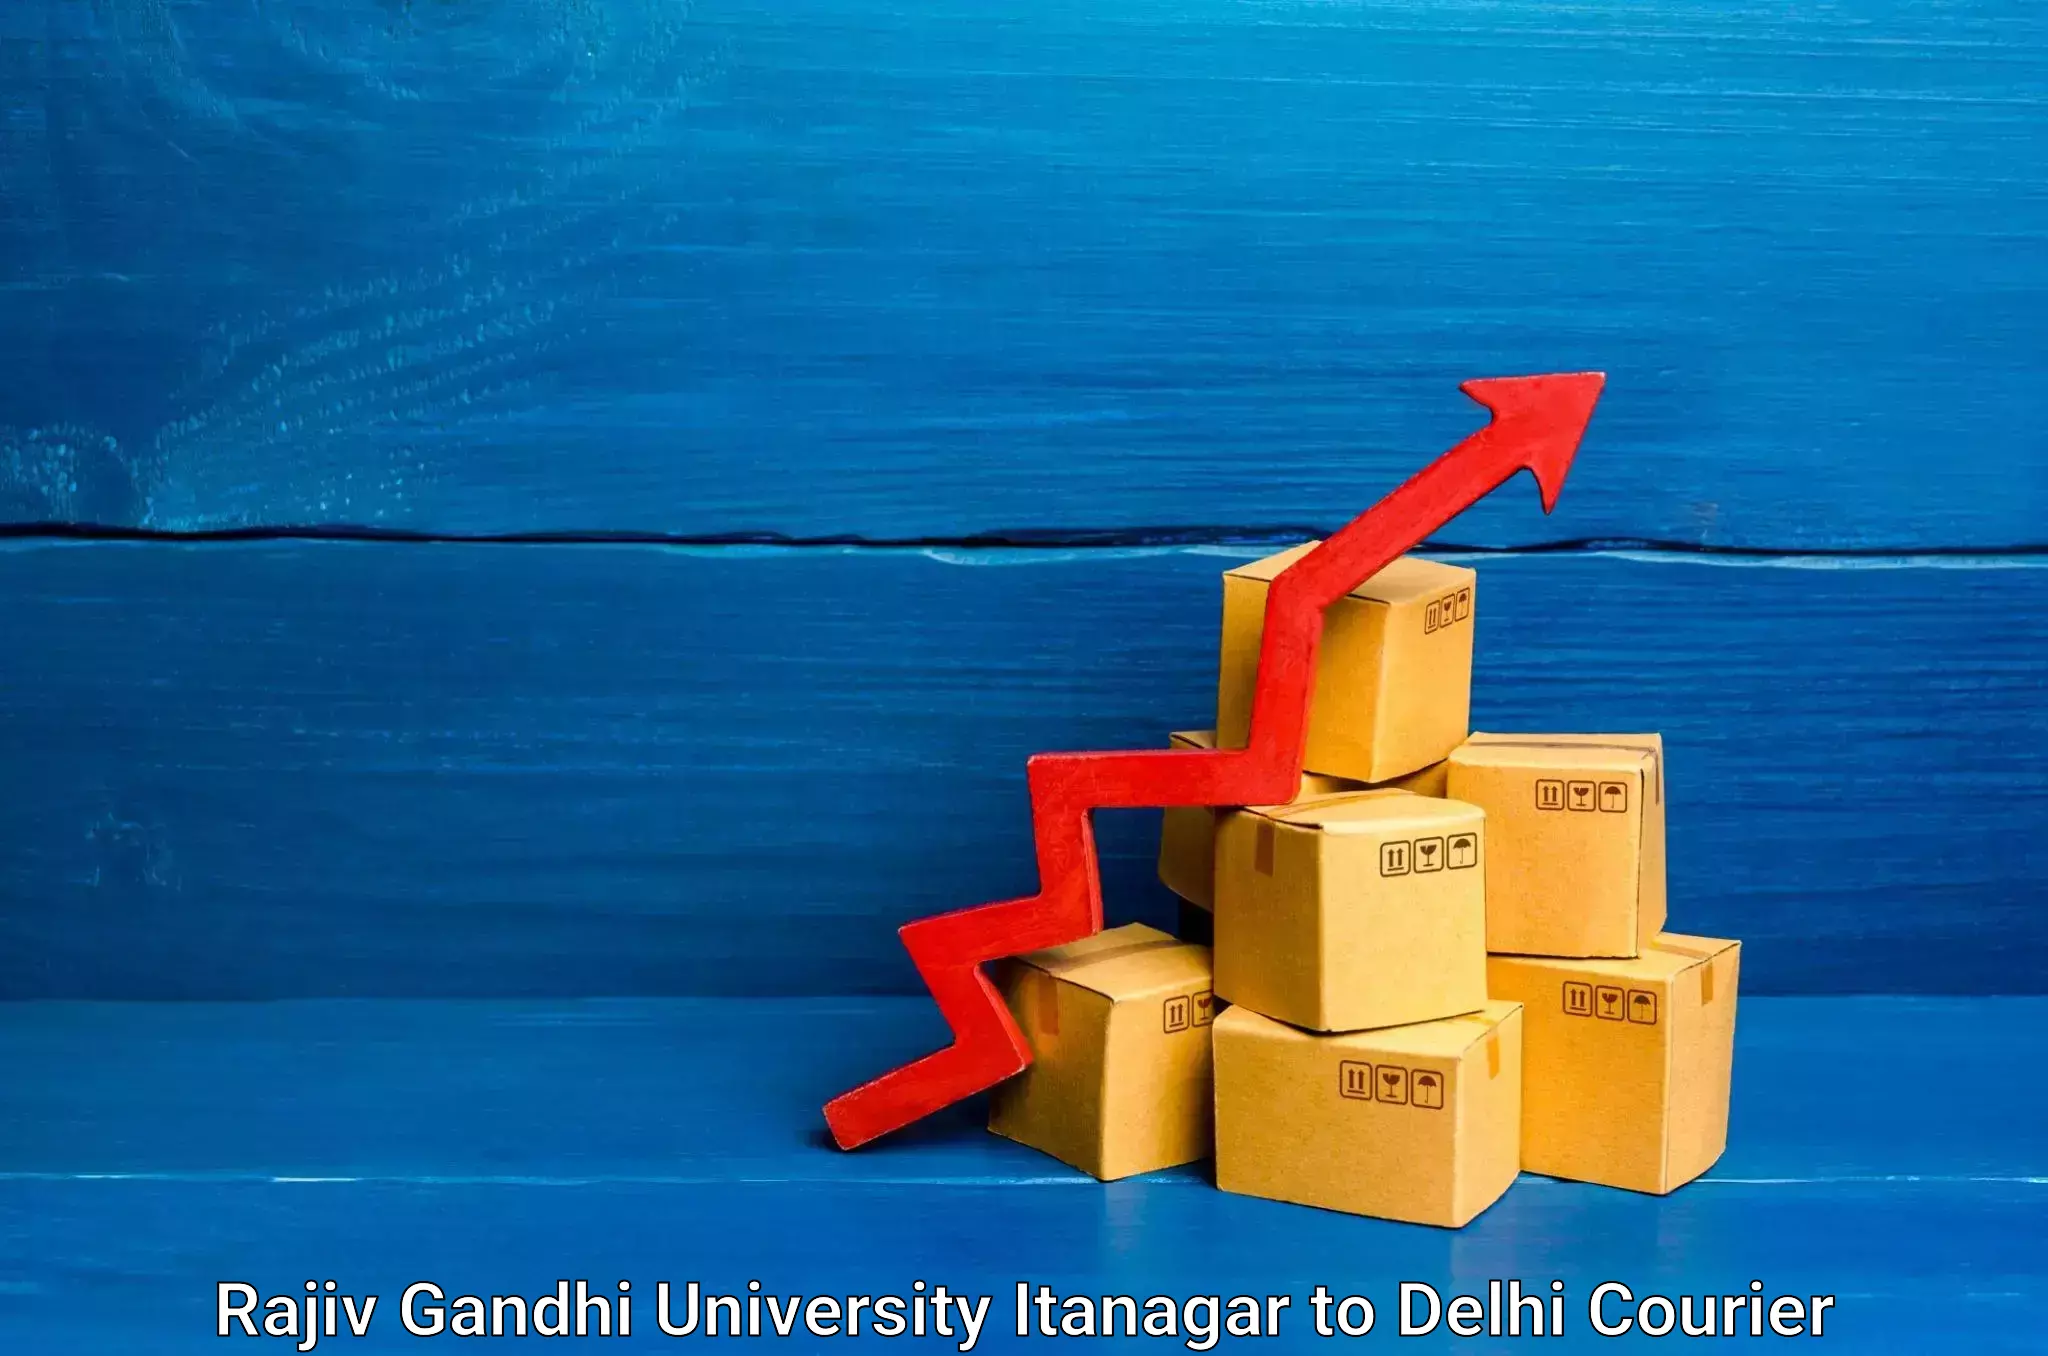 State-of-the-art courier technology Rajiv Gandhi University Itanagar to Lodhi Road